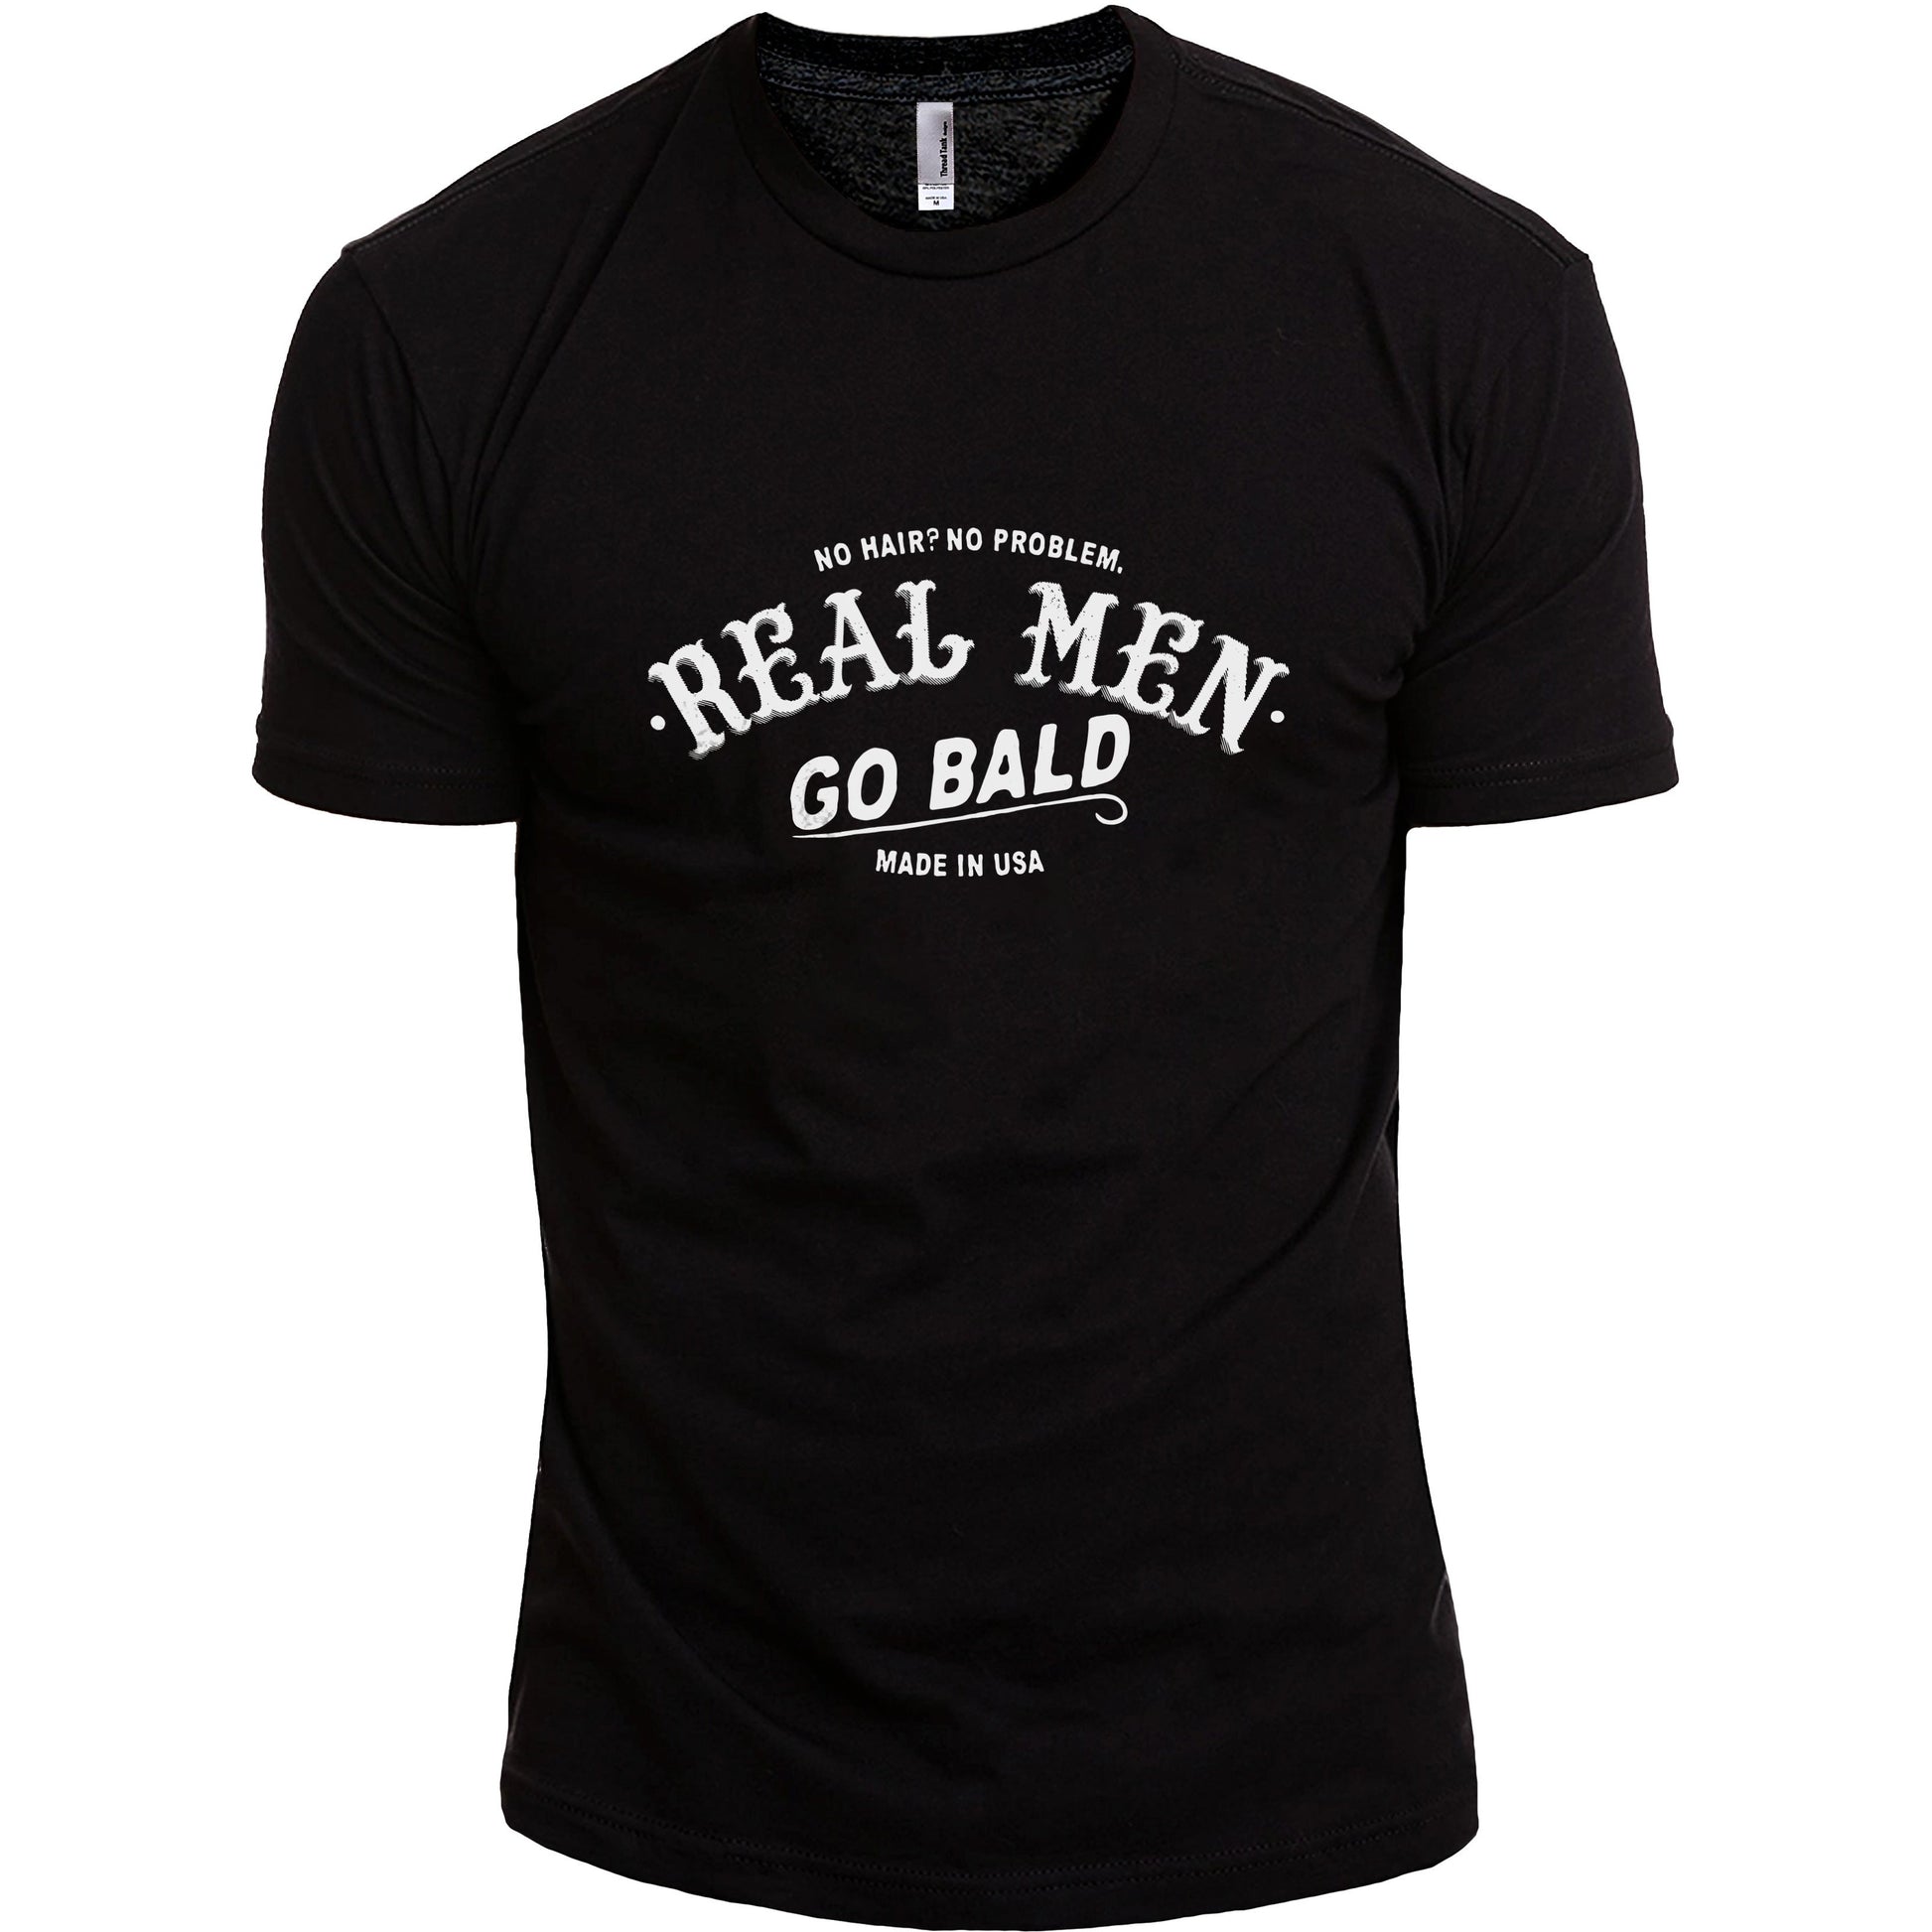 Real Men Go Bald Black Printed Graphic Men's Crew T-Shirt Tee Side View